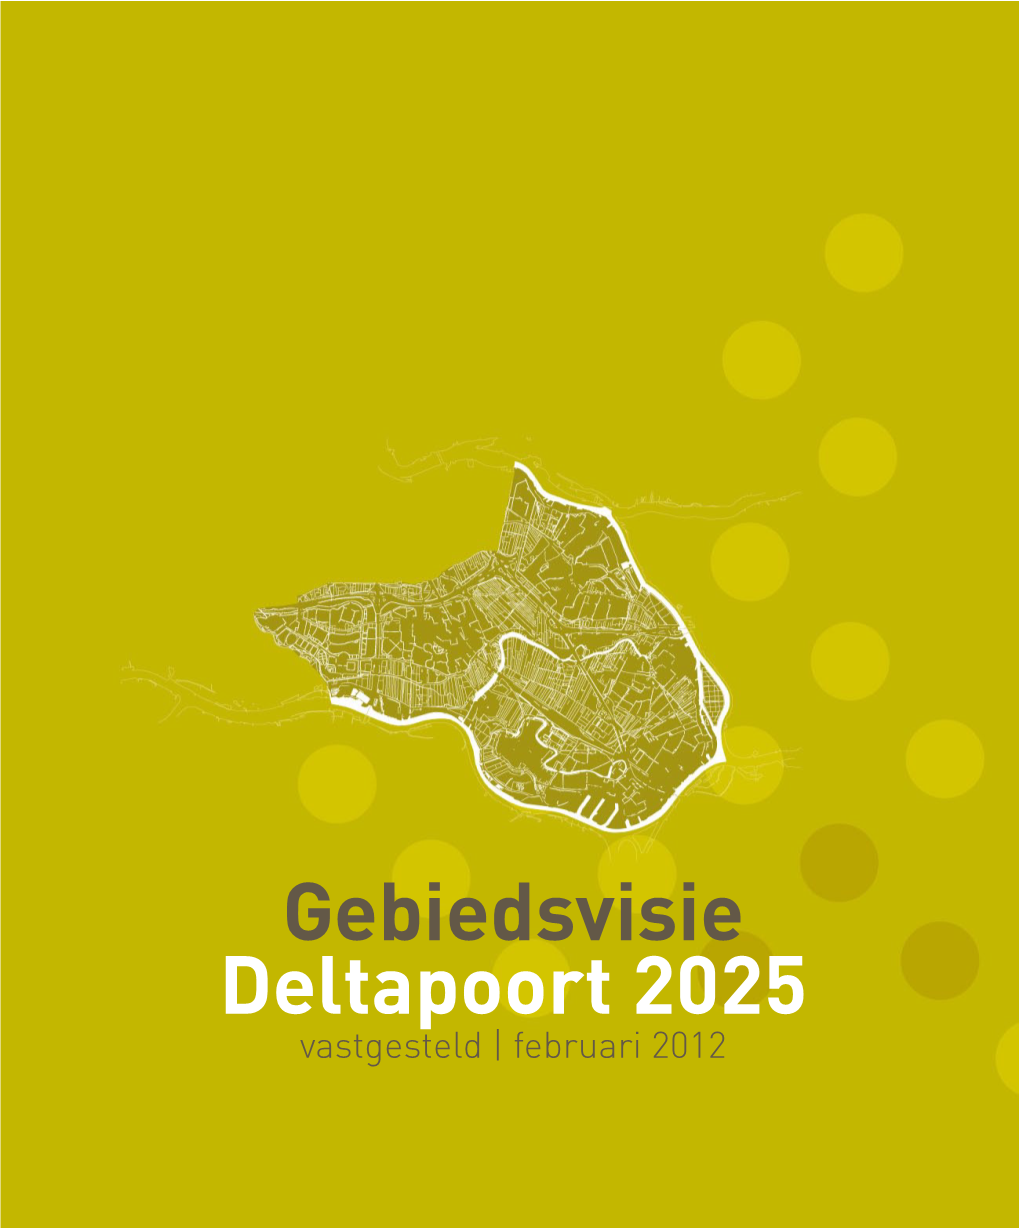 Gebiedsvisie Deltapoort 2025 Vastgesteld | Februari 2012